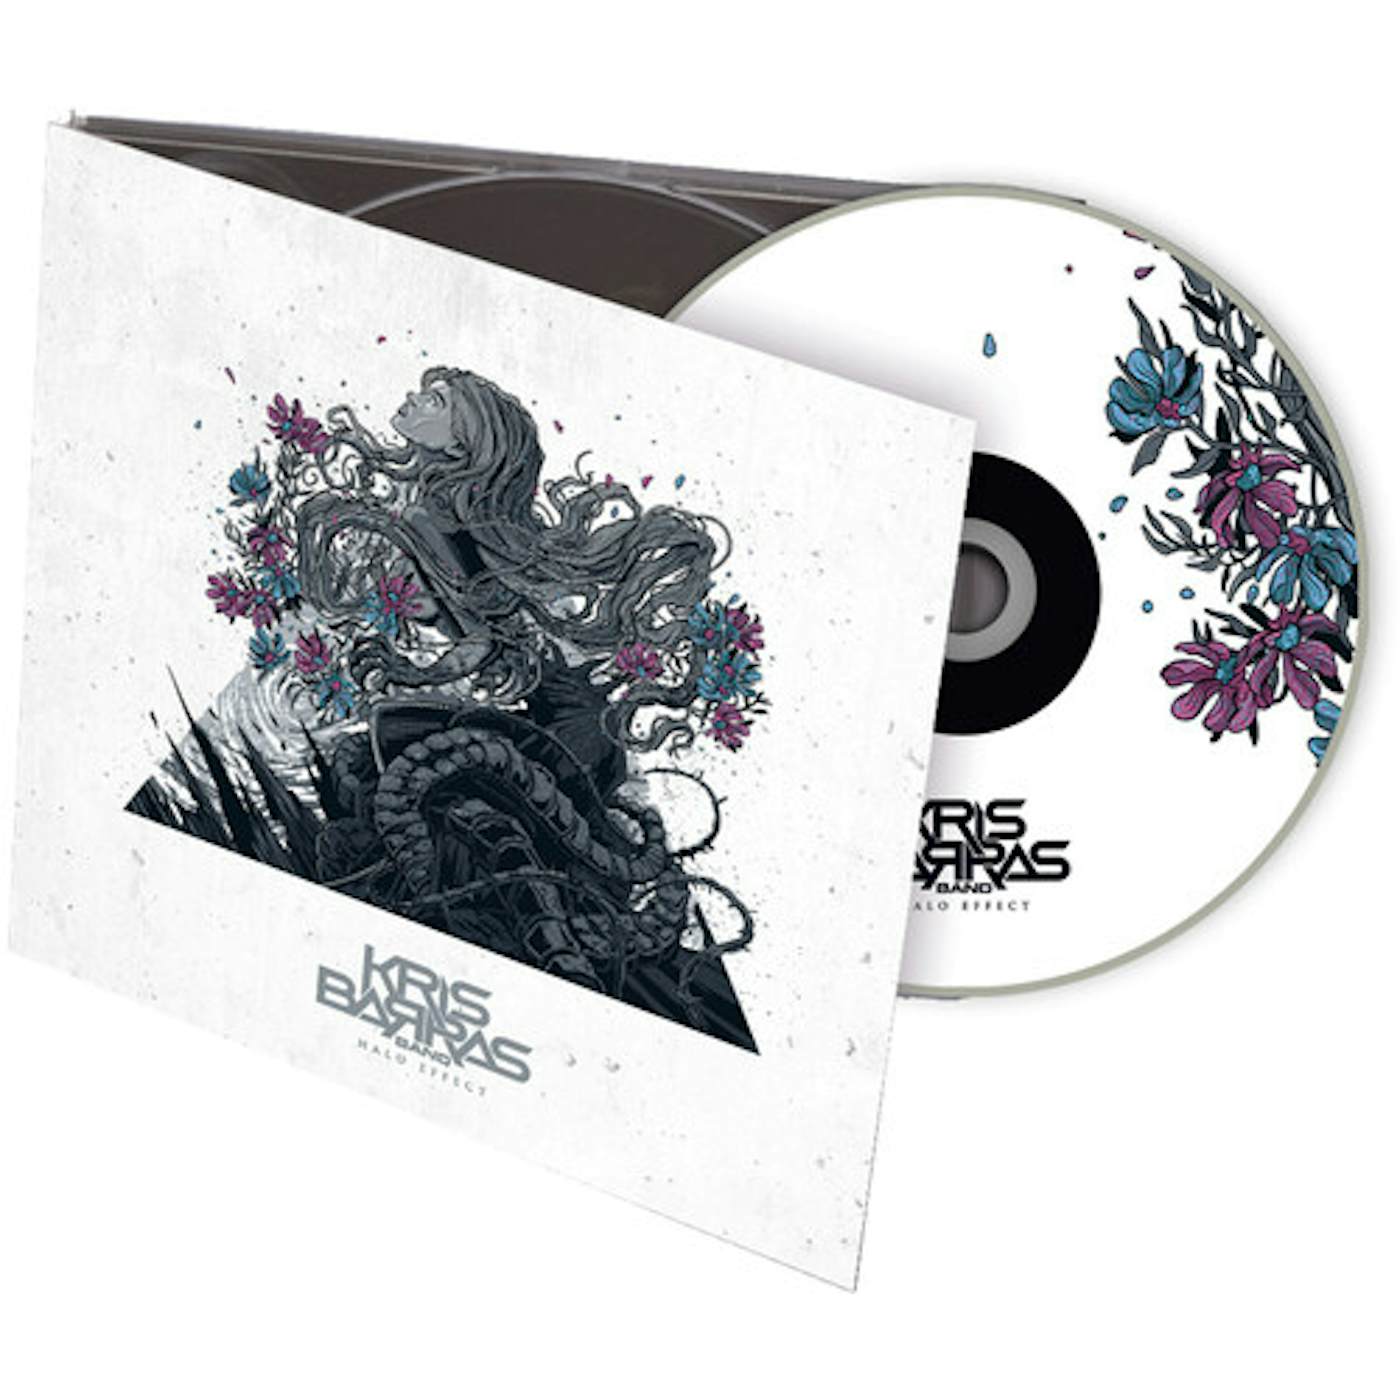 Kris Barras Band HALO EFFECT Vinyl Record